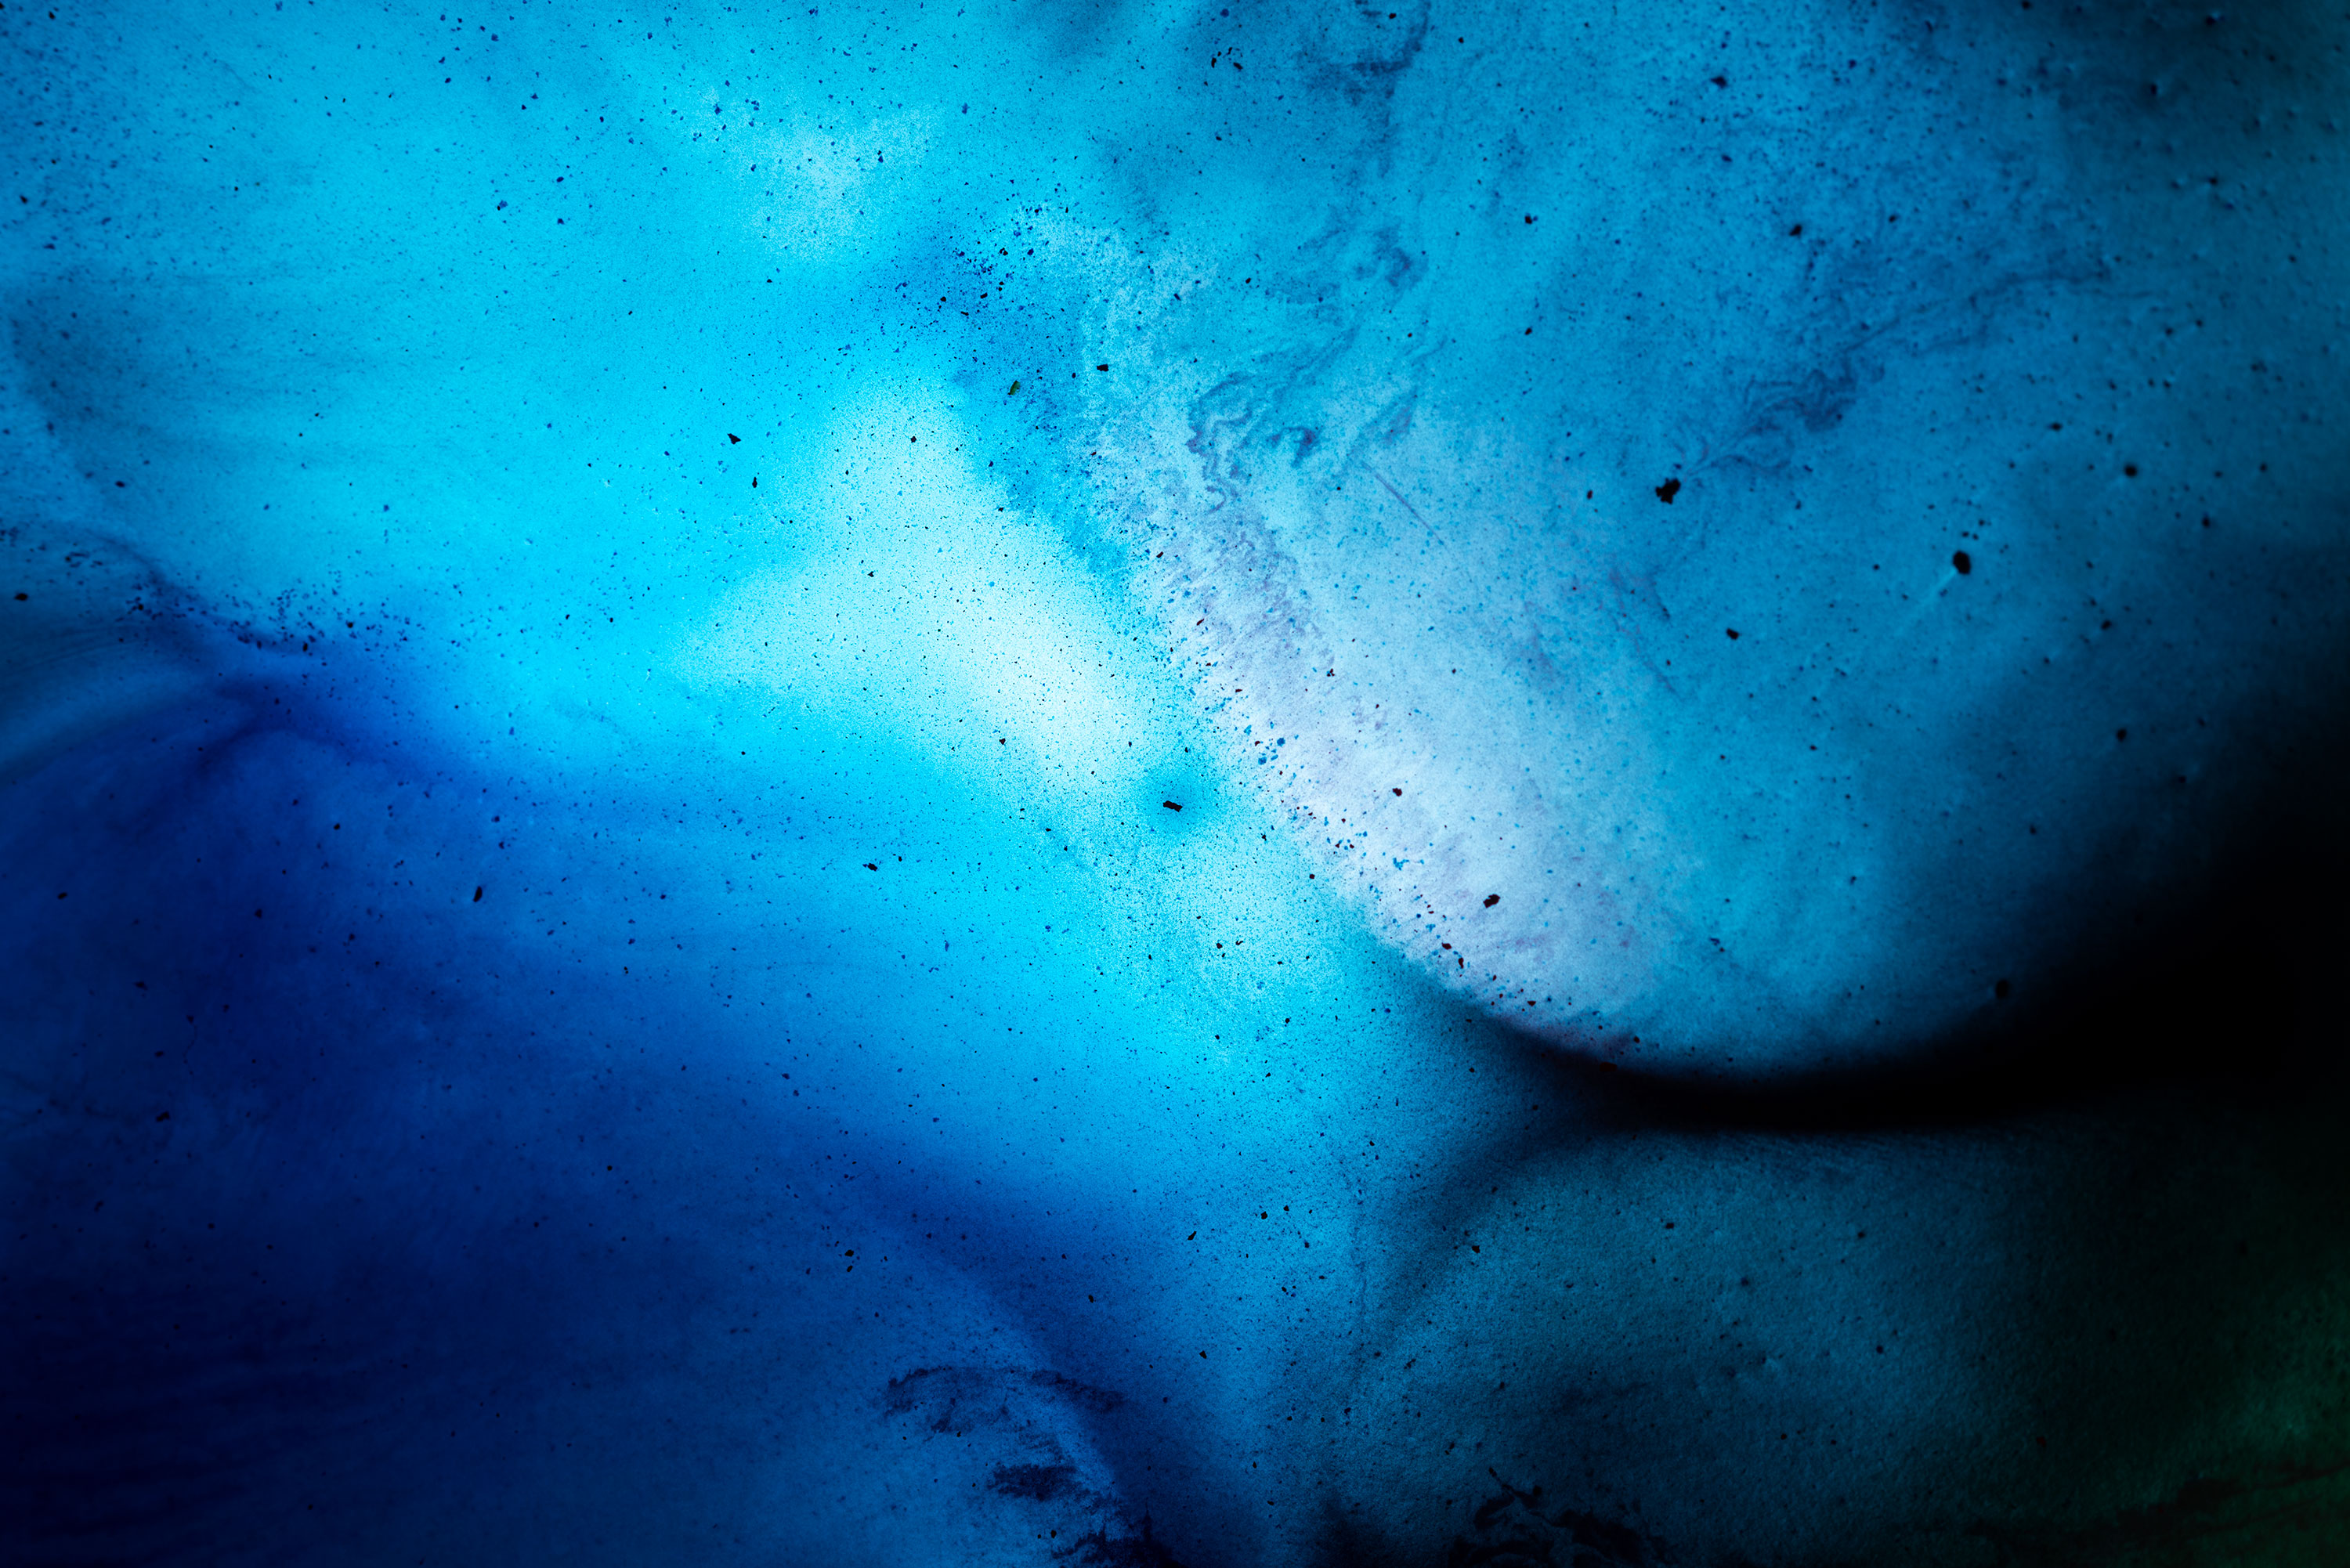 Minimal art photography made of blue watercolour. Image by Jennifer Esseiva.